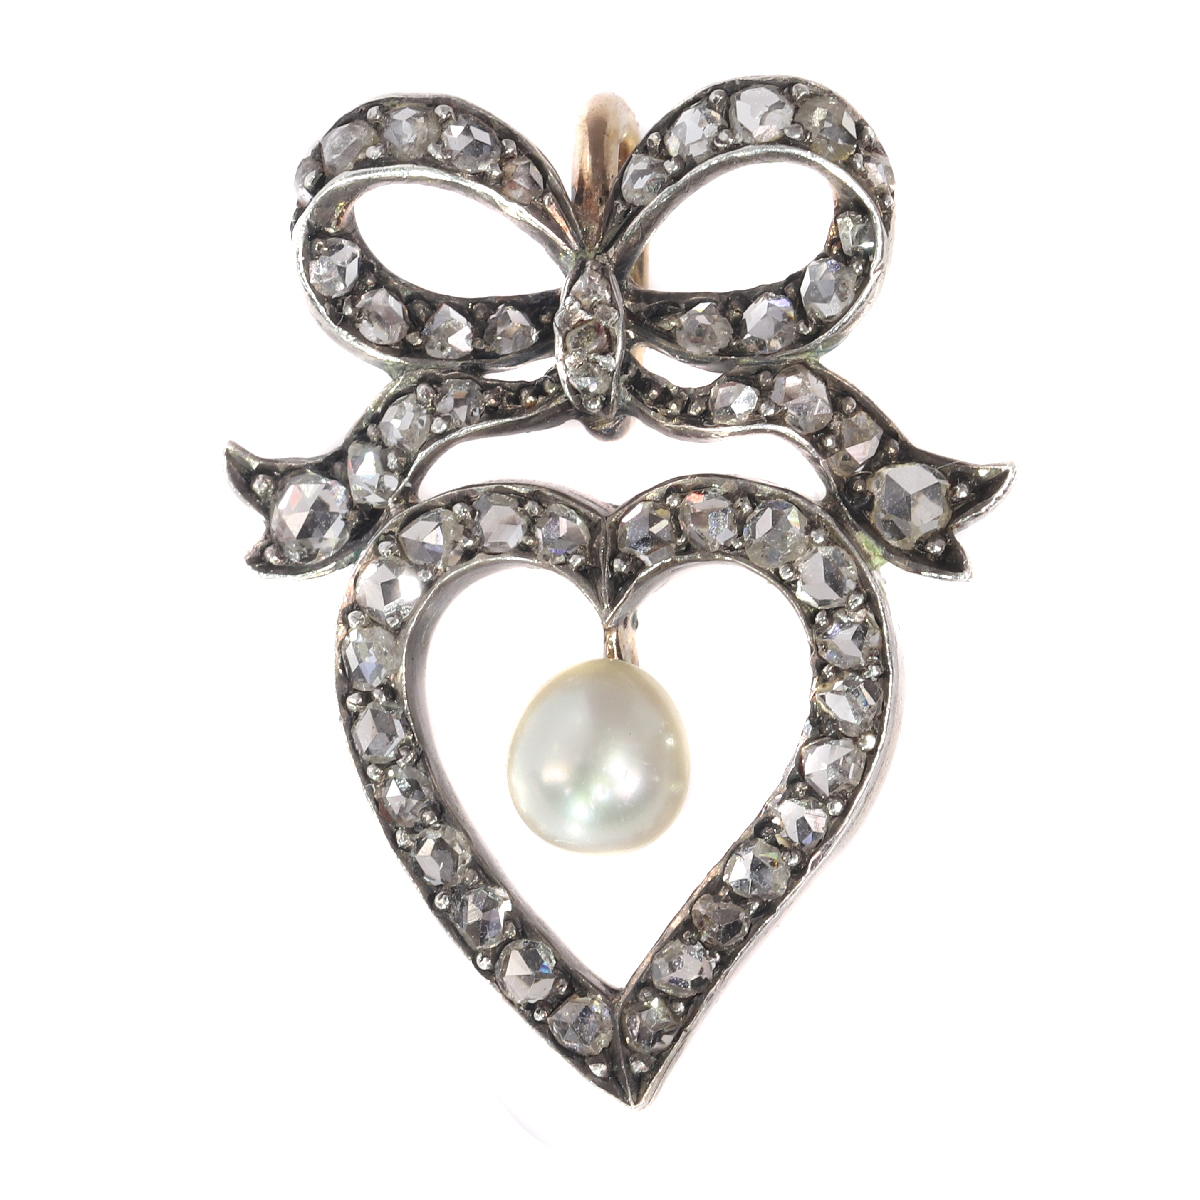 Antique Victorian diamond heart pendant